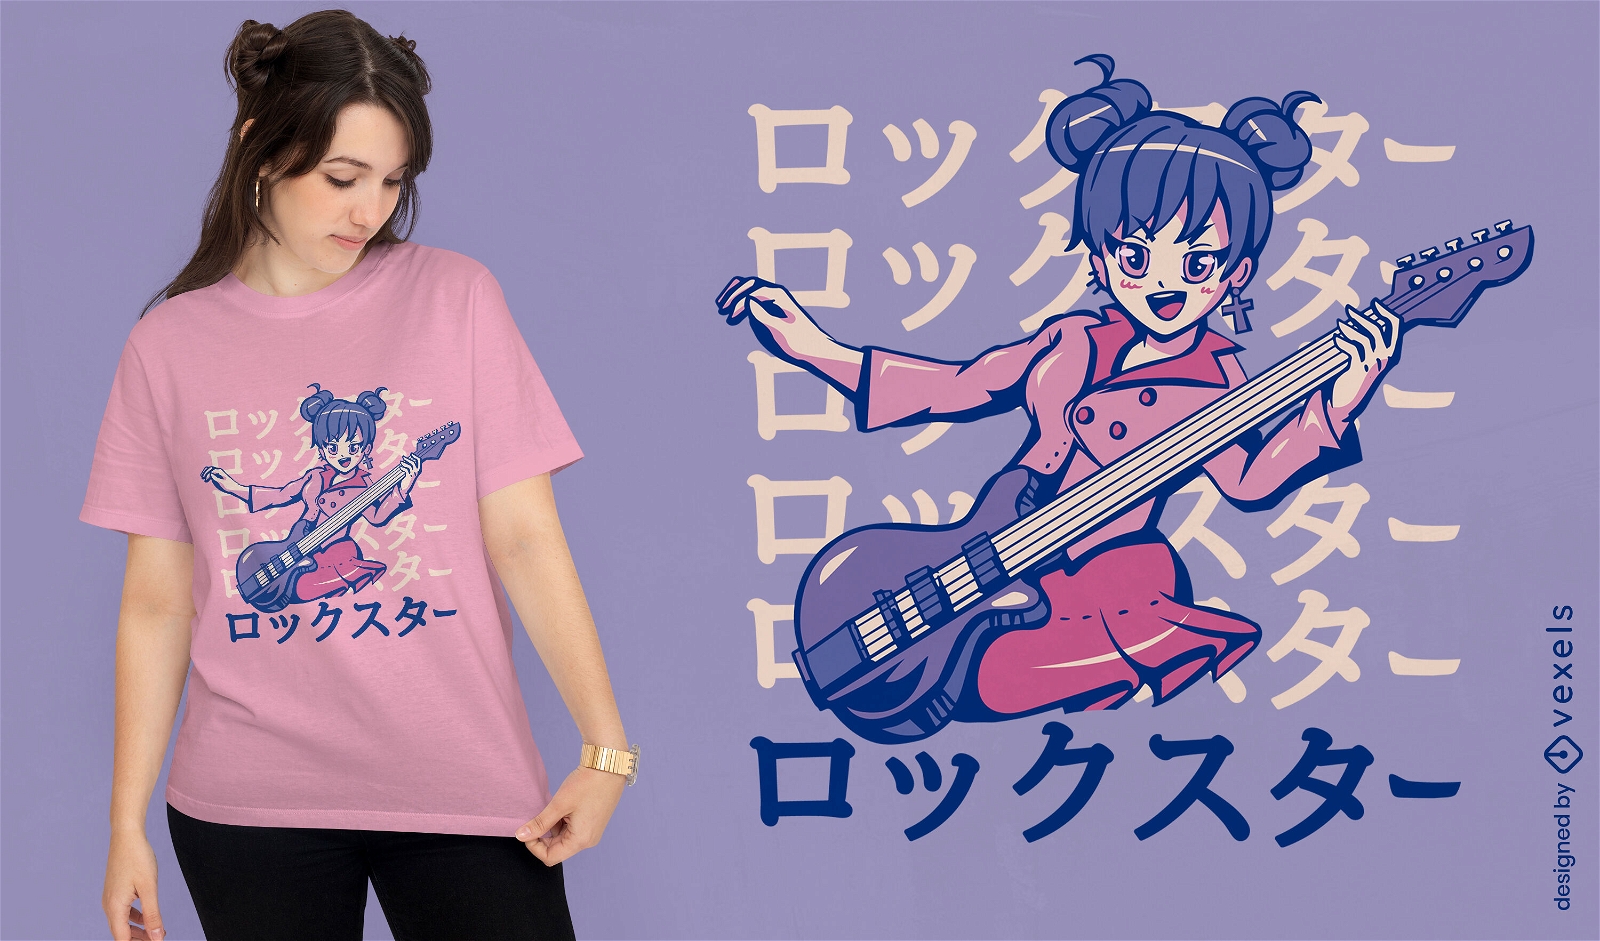 Bass Anime Girl Music T-shirt Design Vector Download